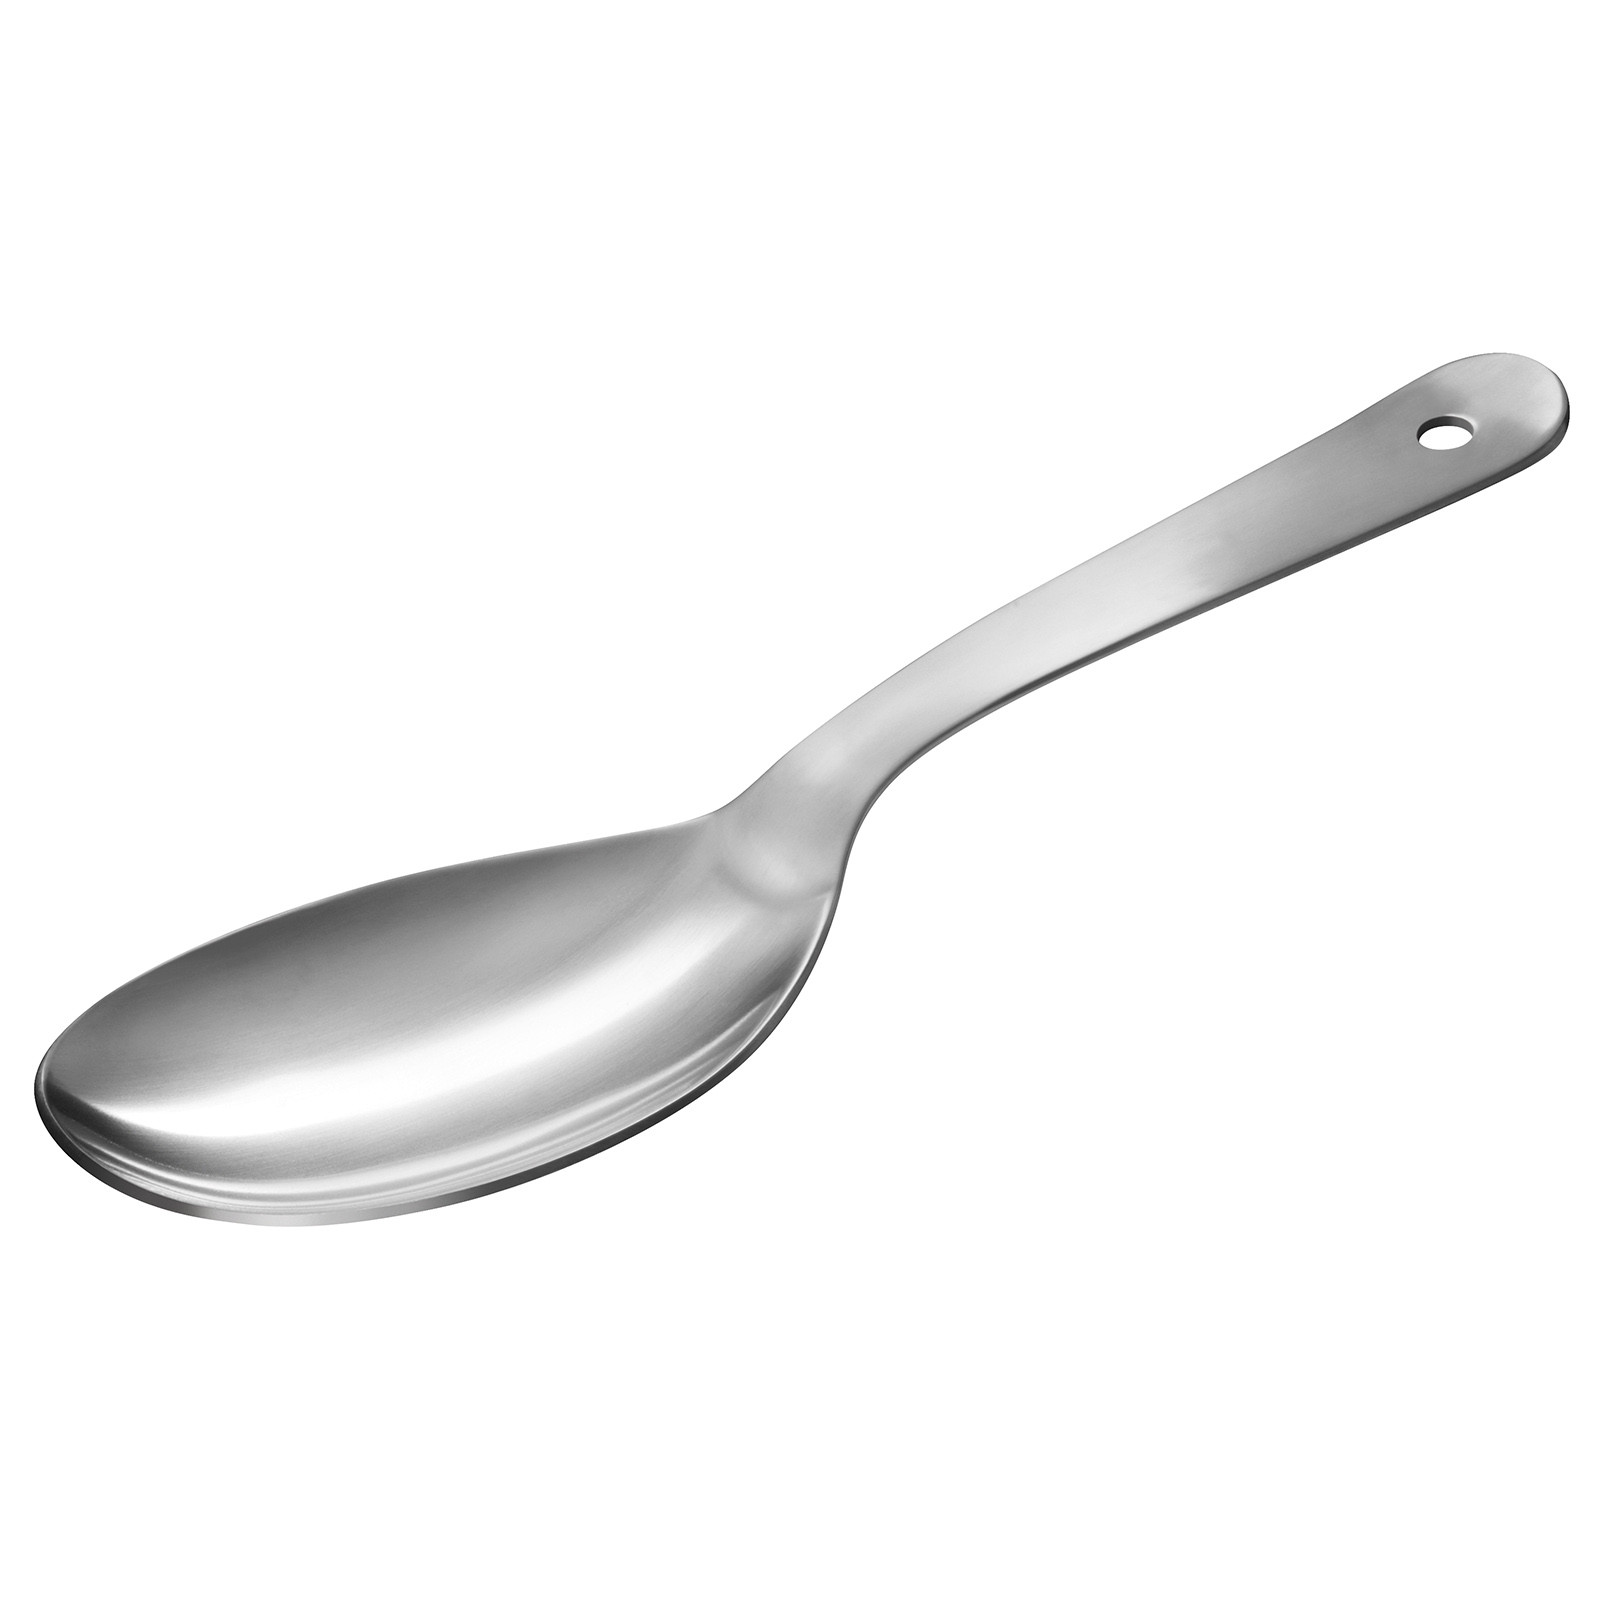 Serving spoon - POC, Kitchen utensils 